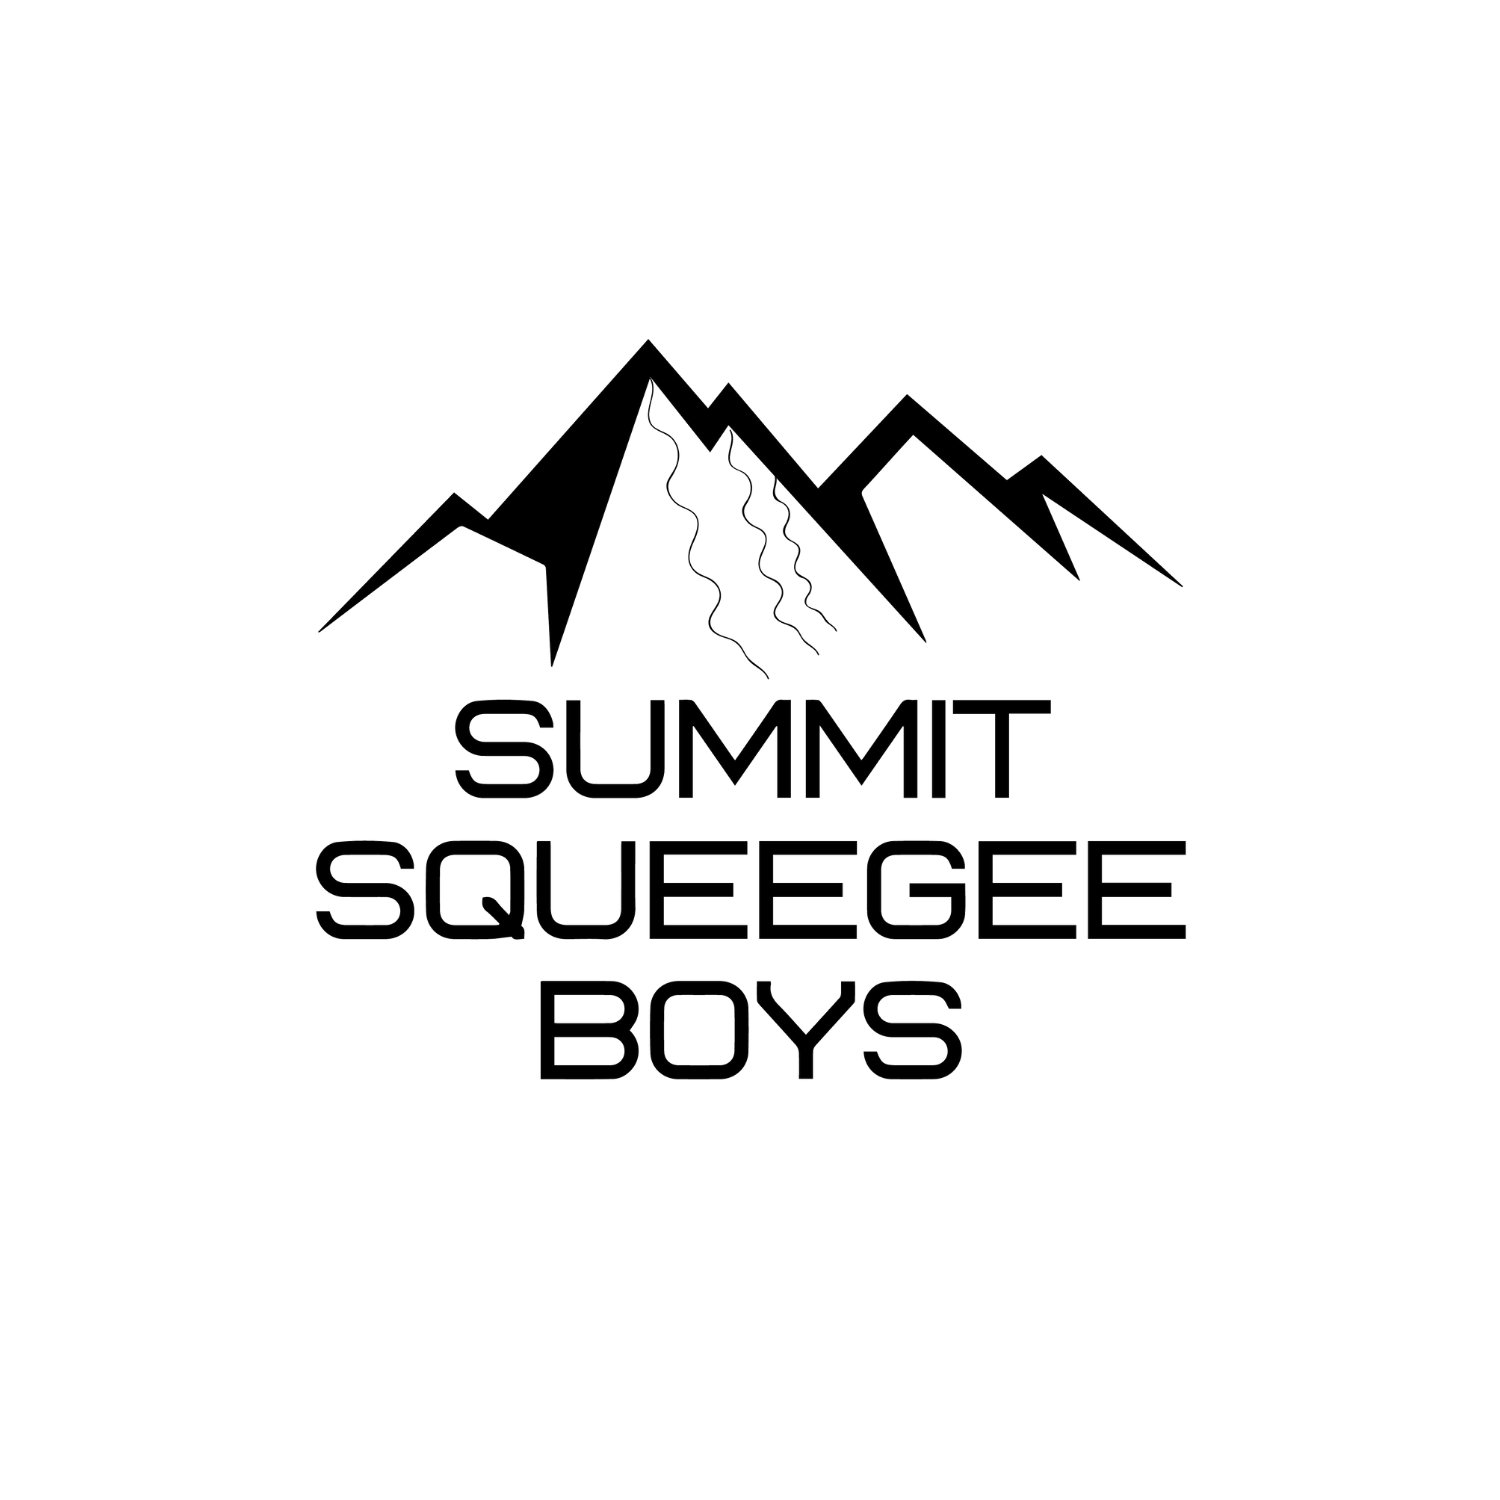 Summit Squeegee Boys